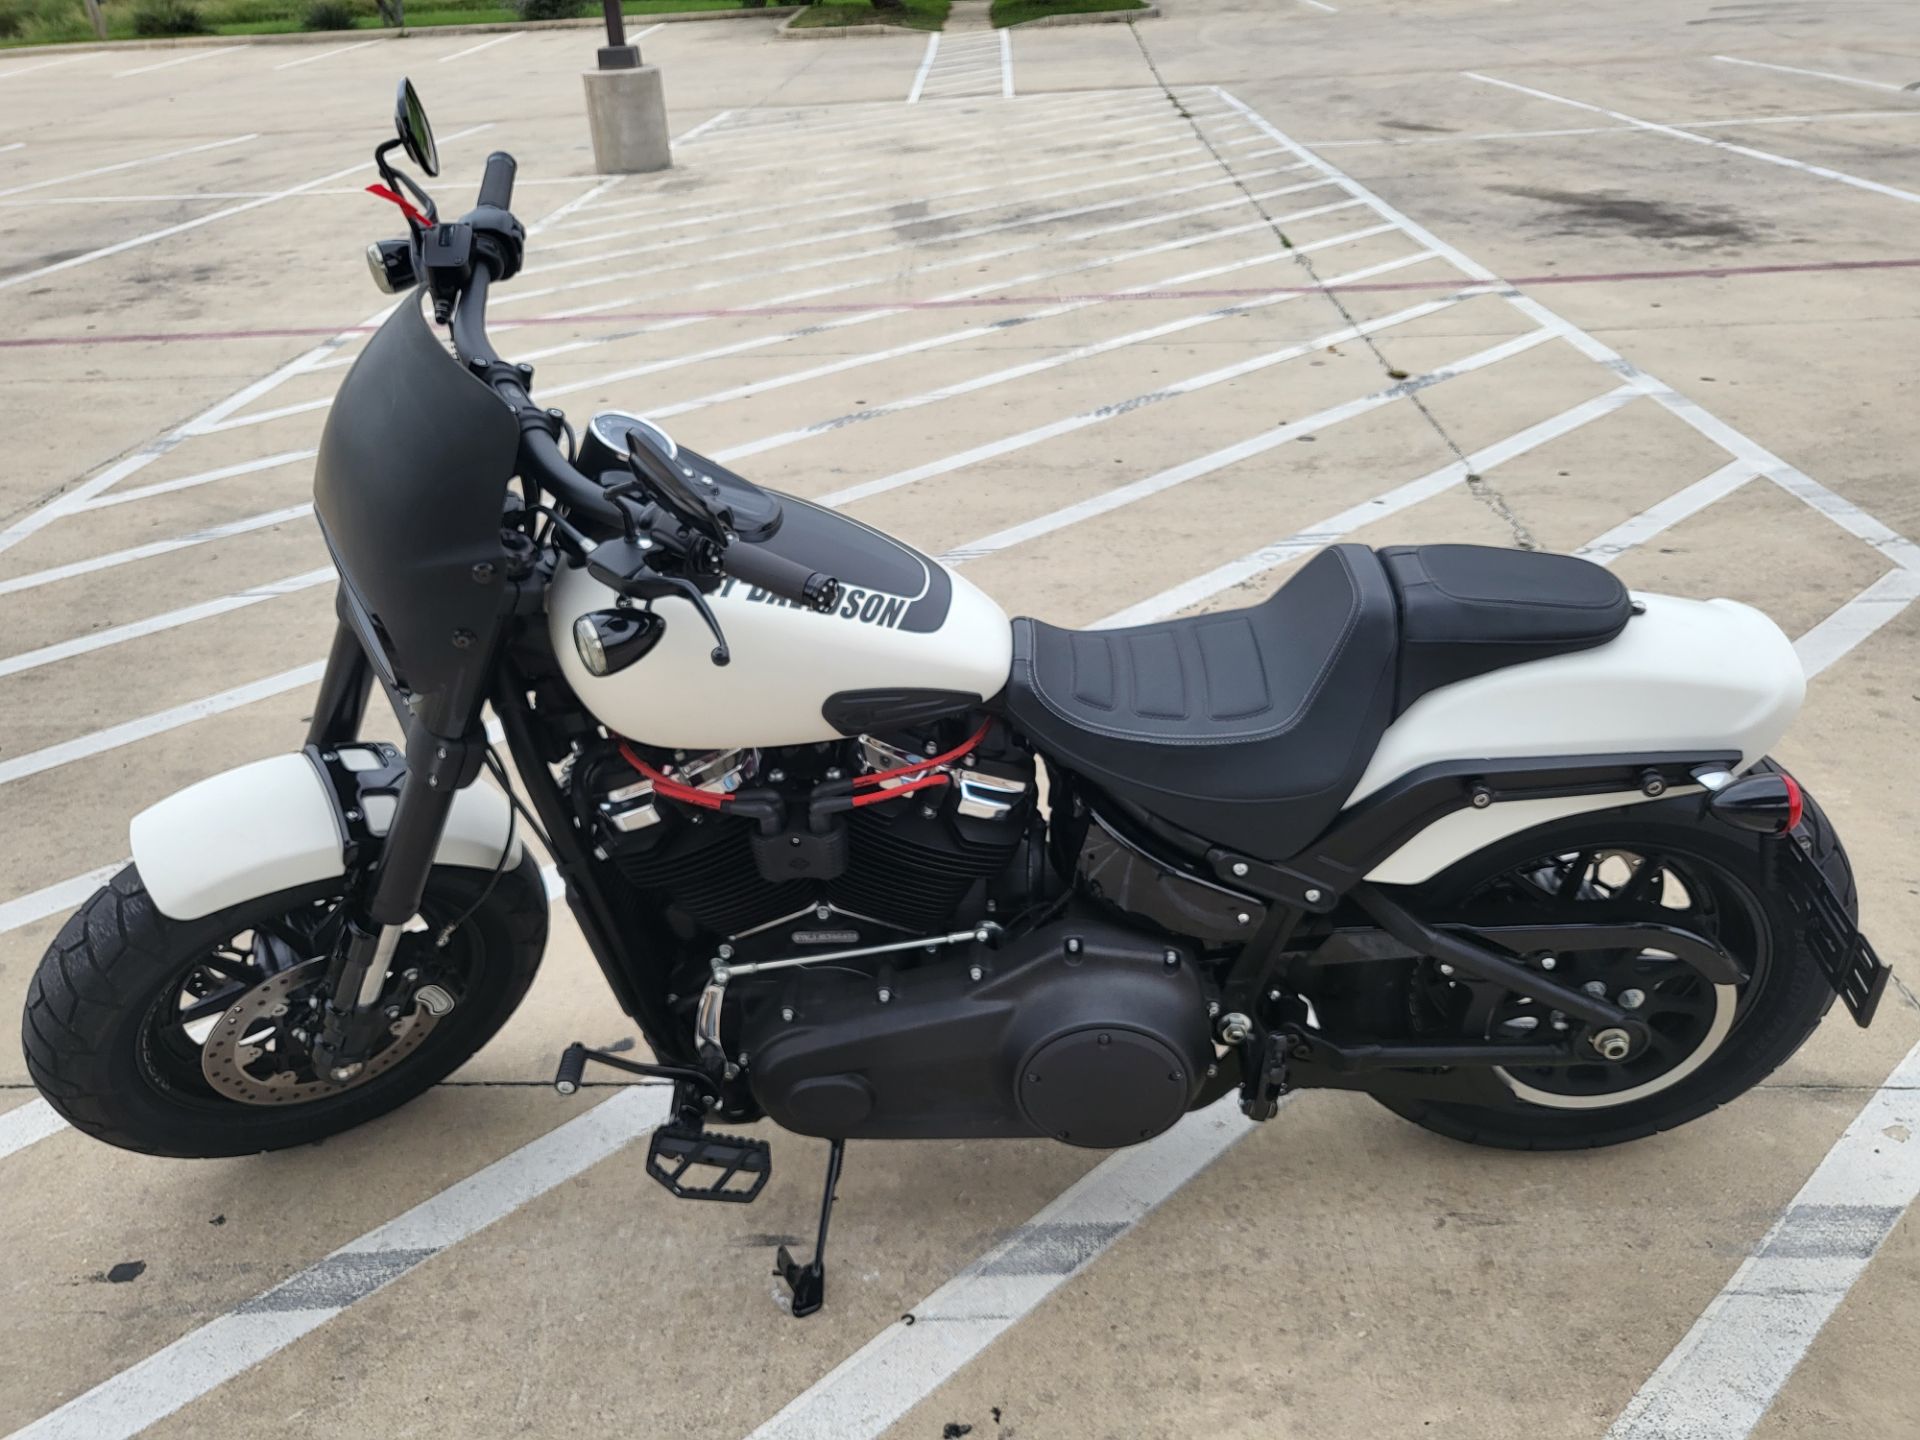 2018 Harley-Davidson Fat Bob® 107 in San Antonio, Texas - Photo 3